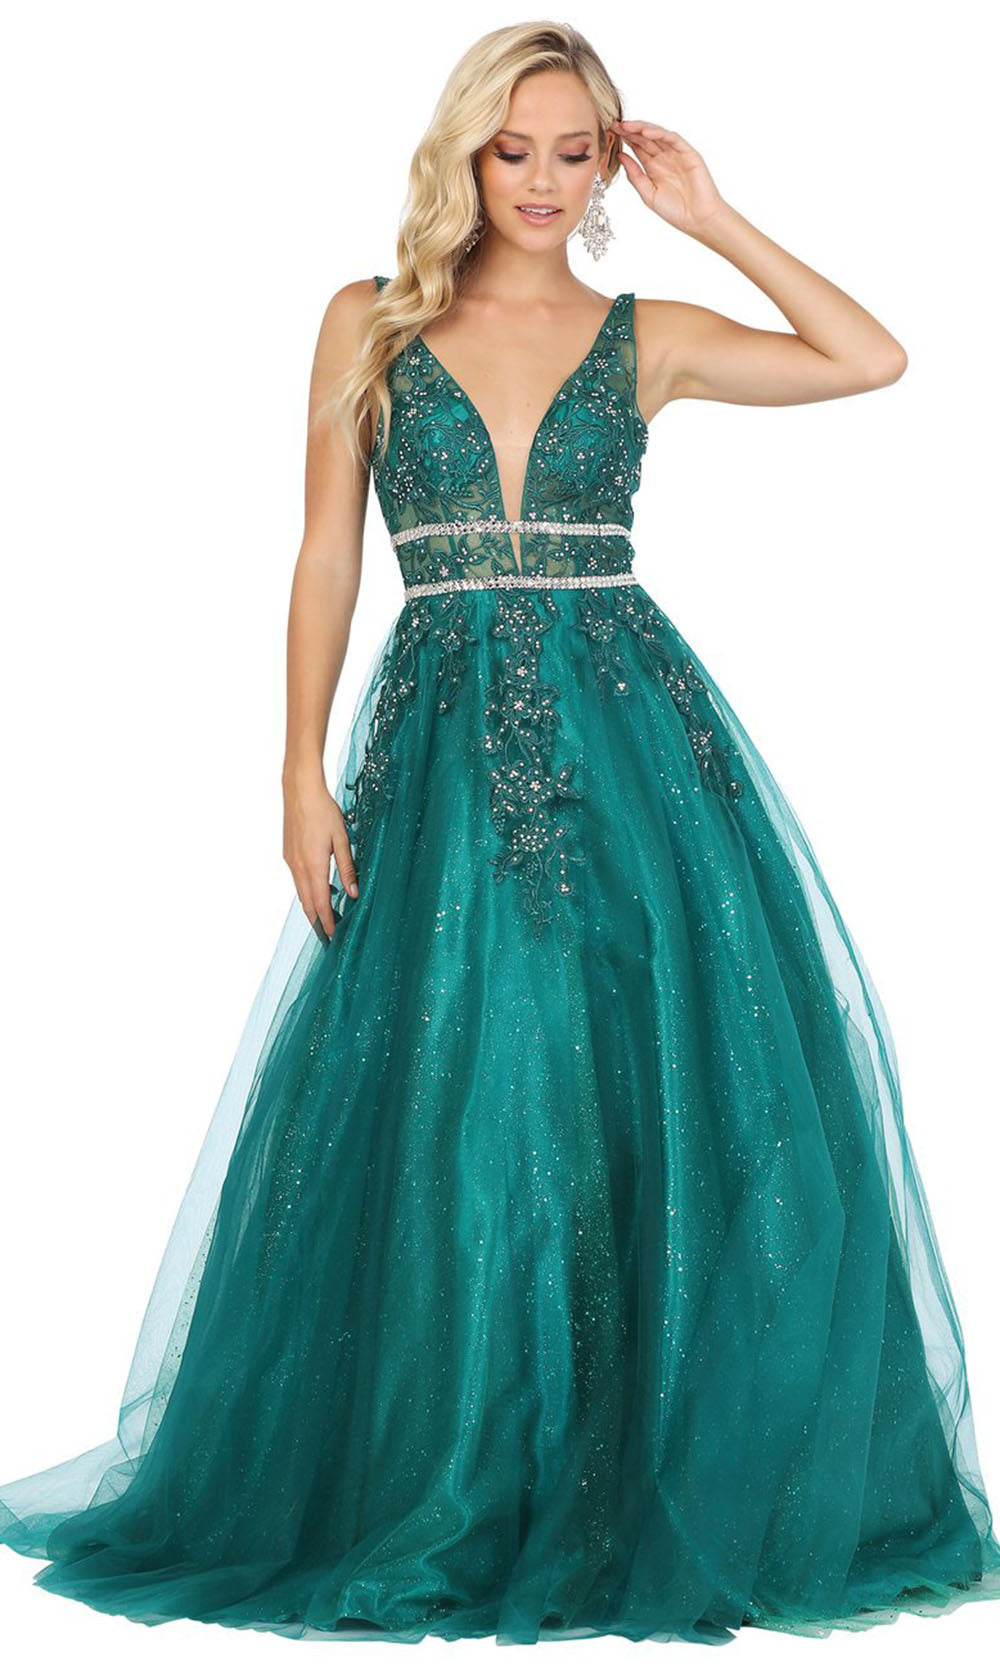 Dancing Queen - 4041 Lace Applique Double Circlet Ballgown In Green